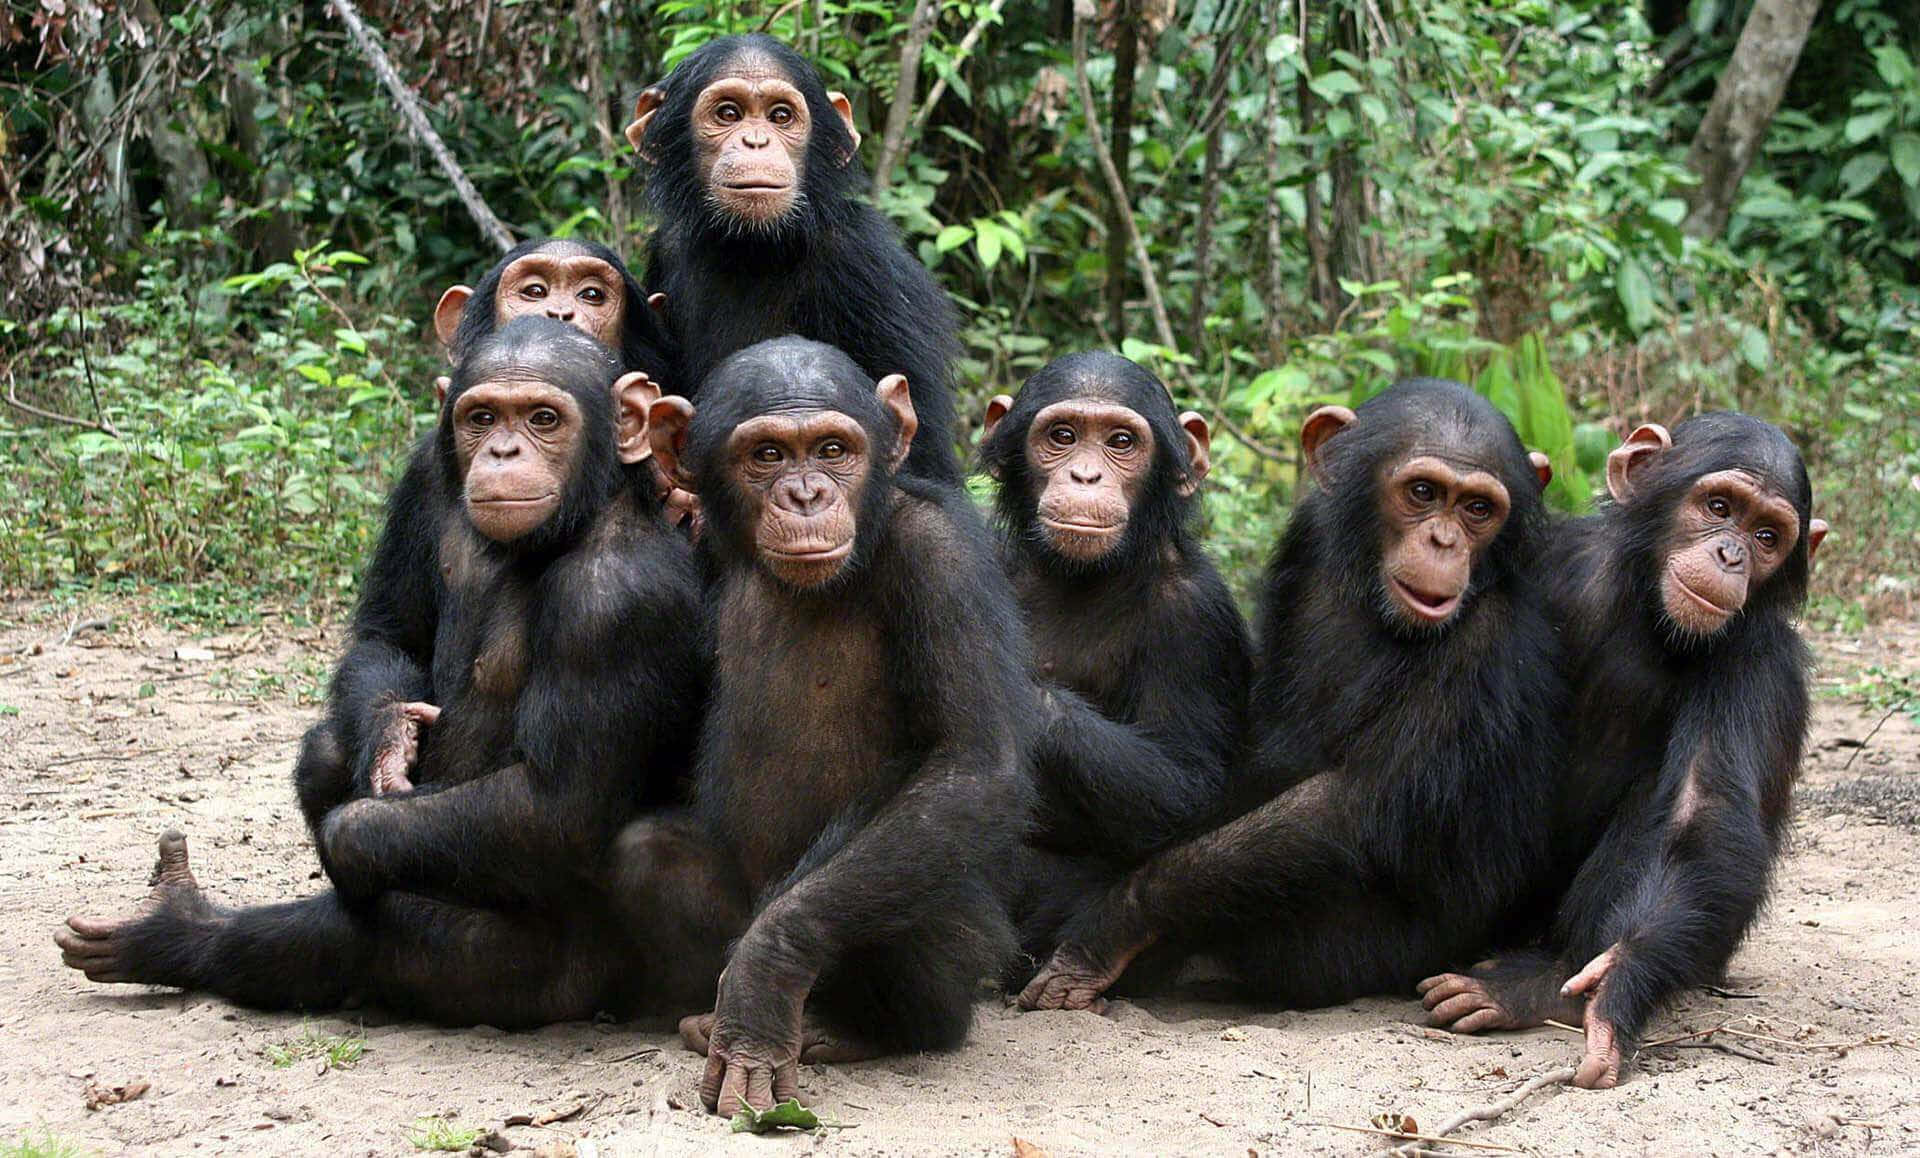 A curious Chimpanzee in its natural habitat